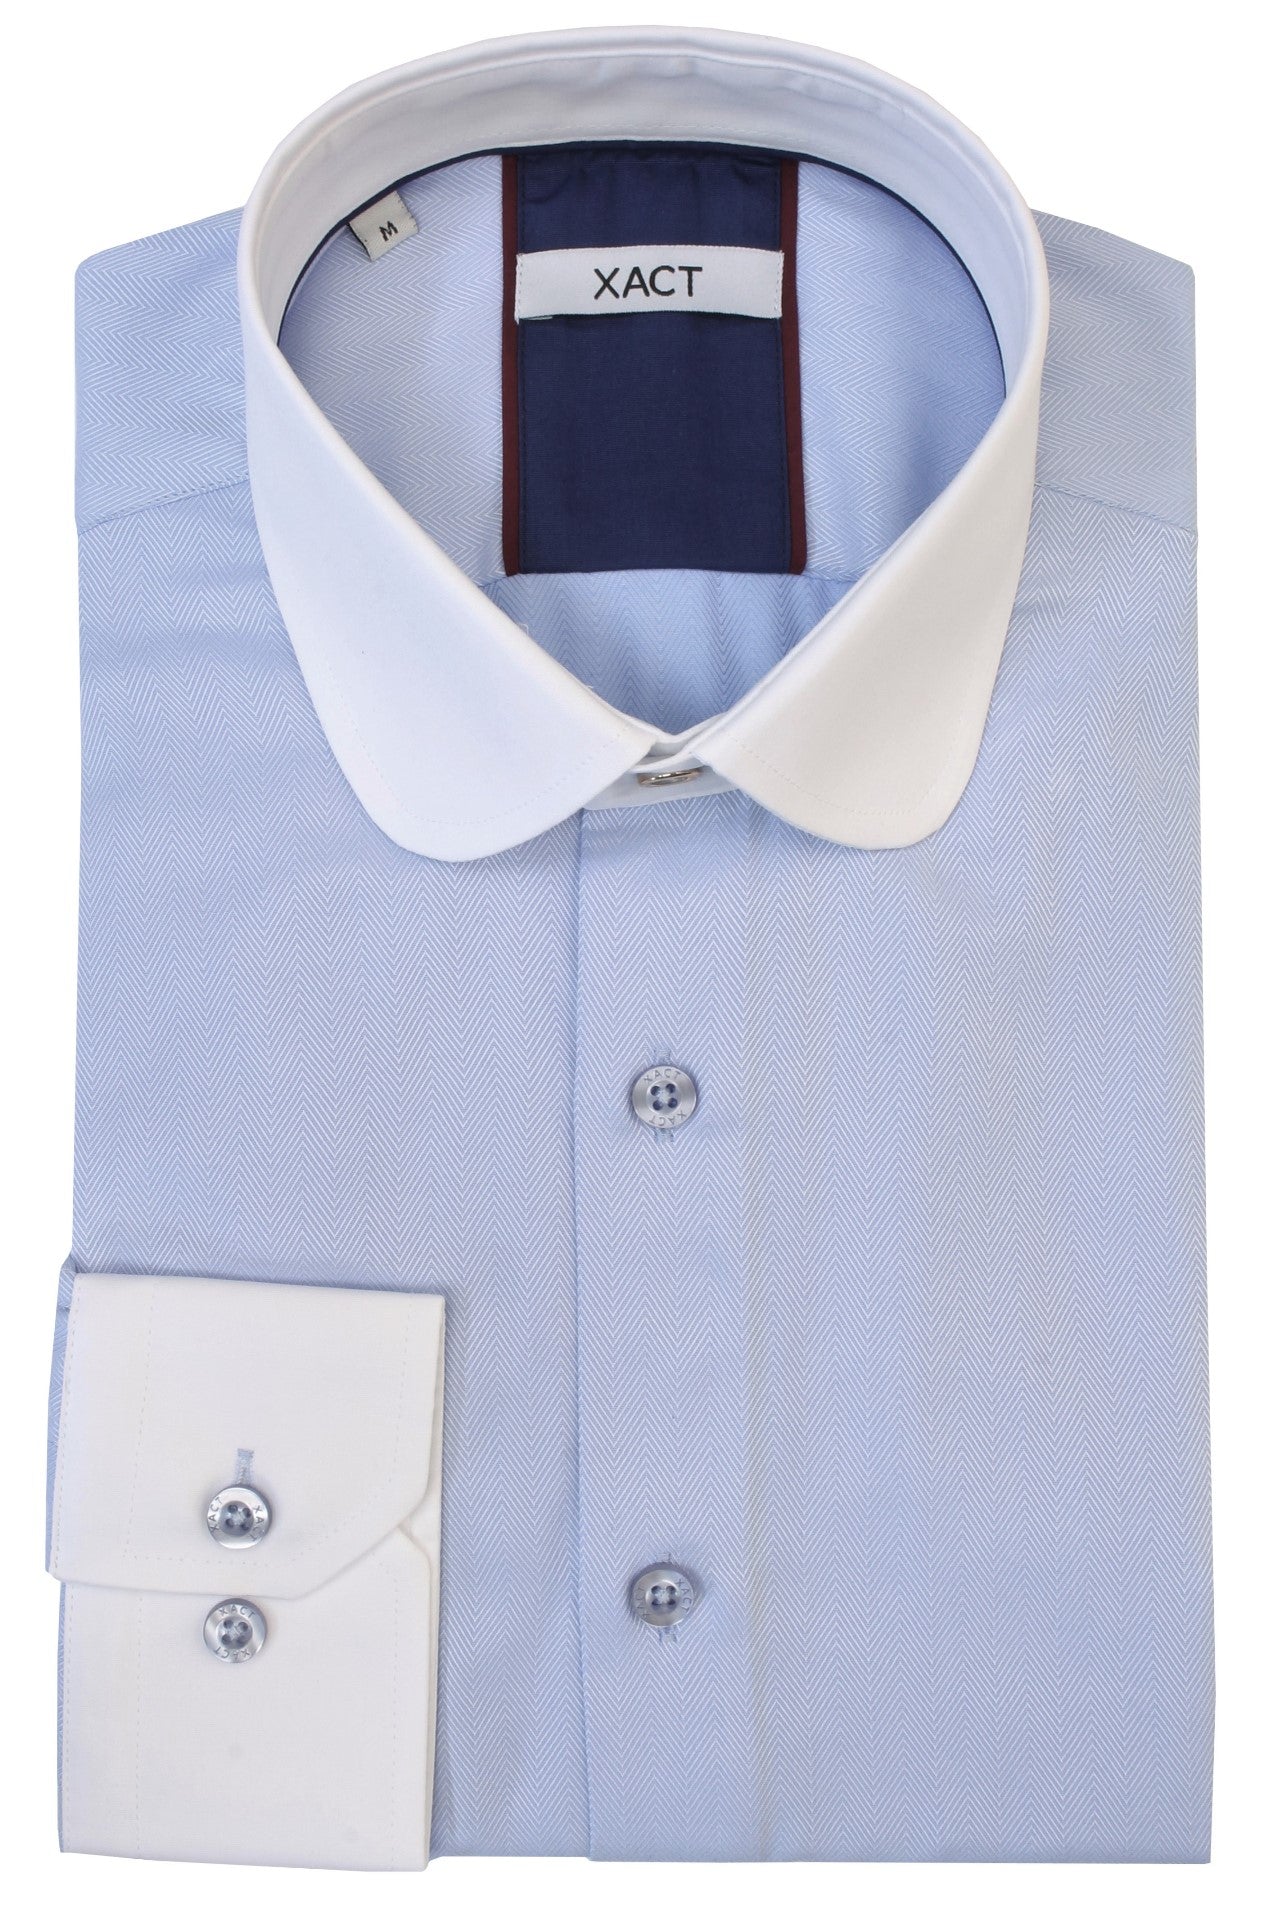 Xact Men's Club/ Penny Collar Shirt - White Contrast Collar & Cuffs